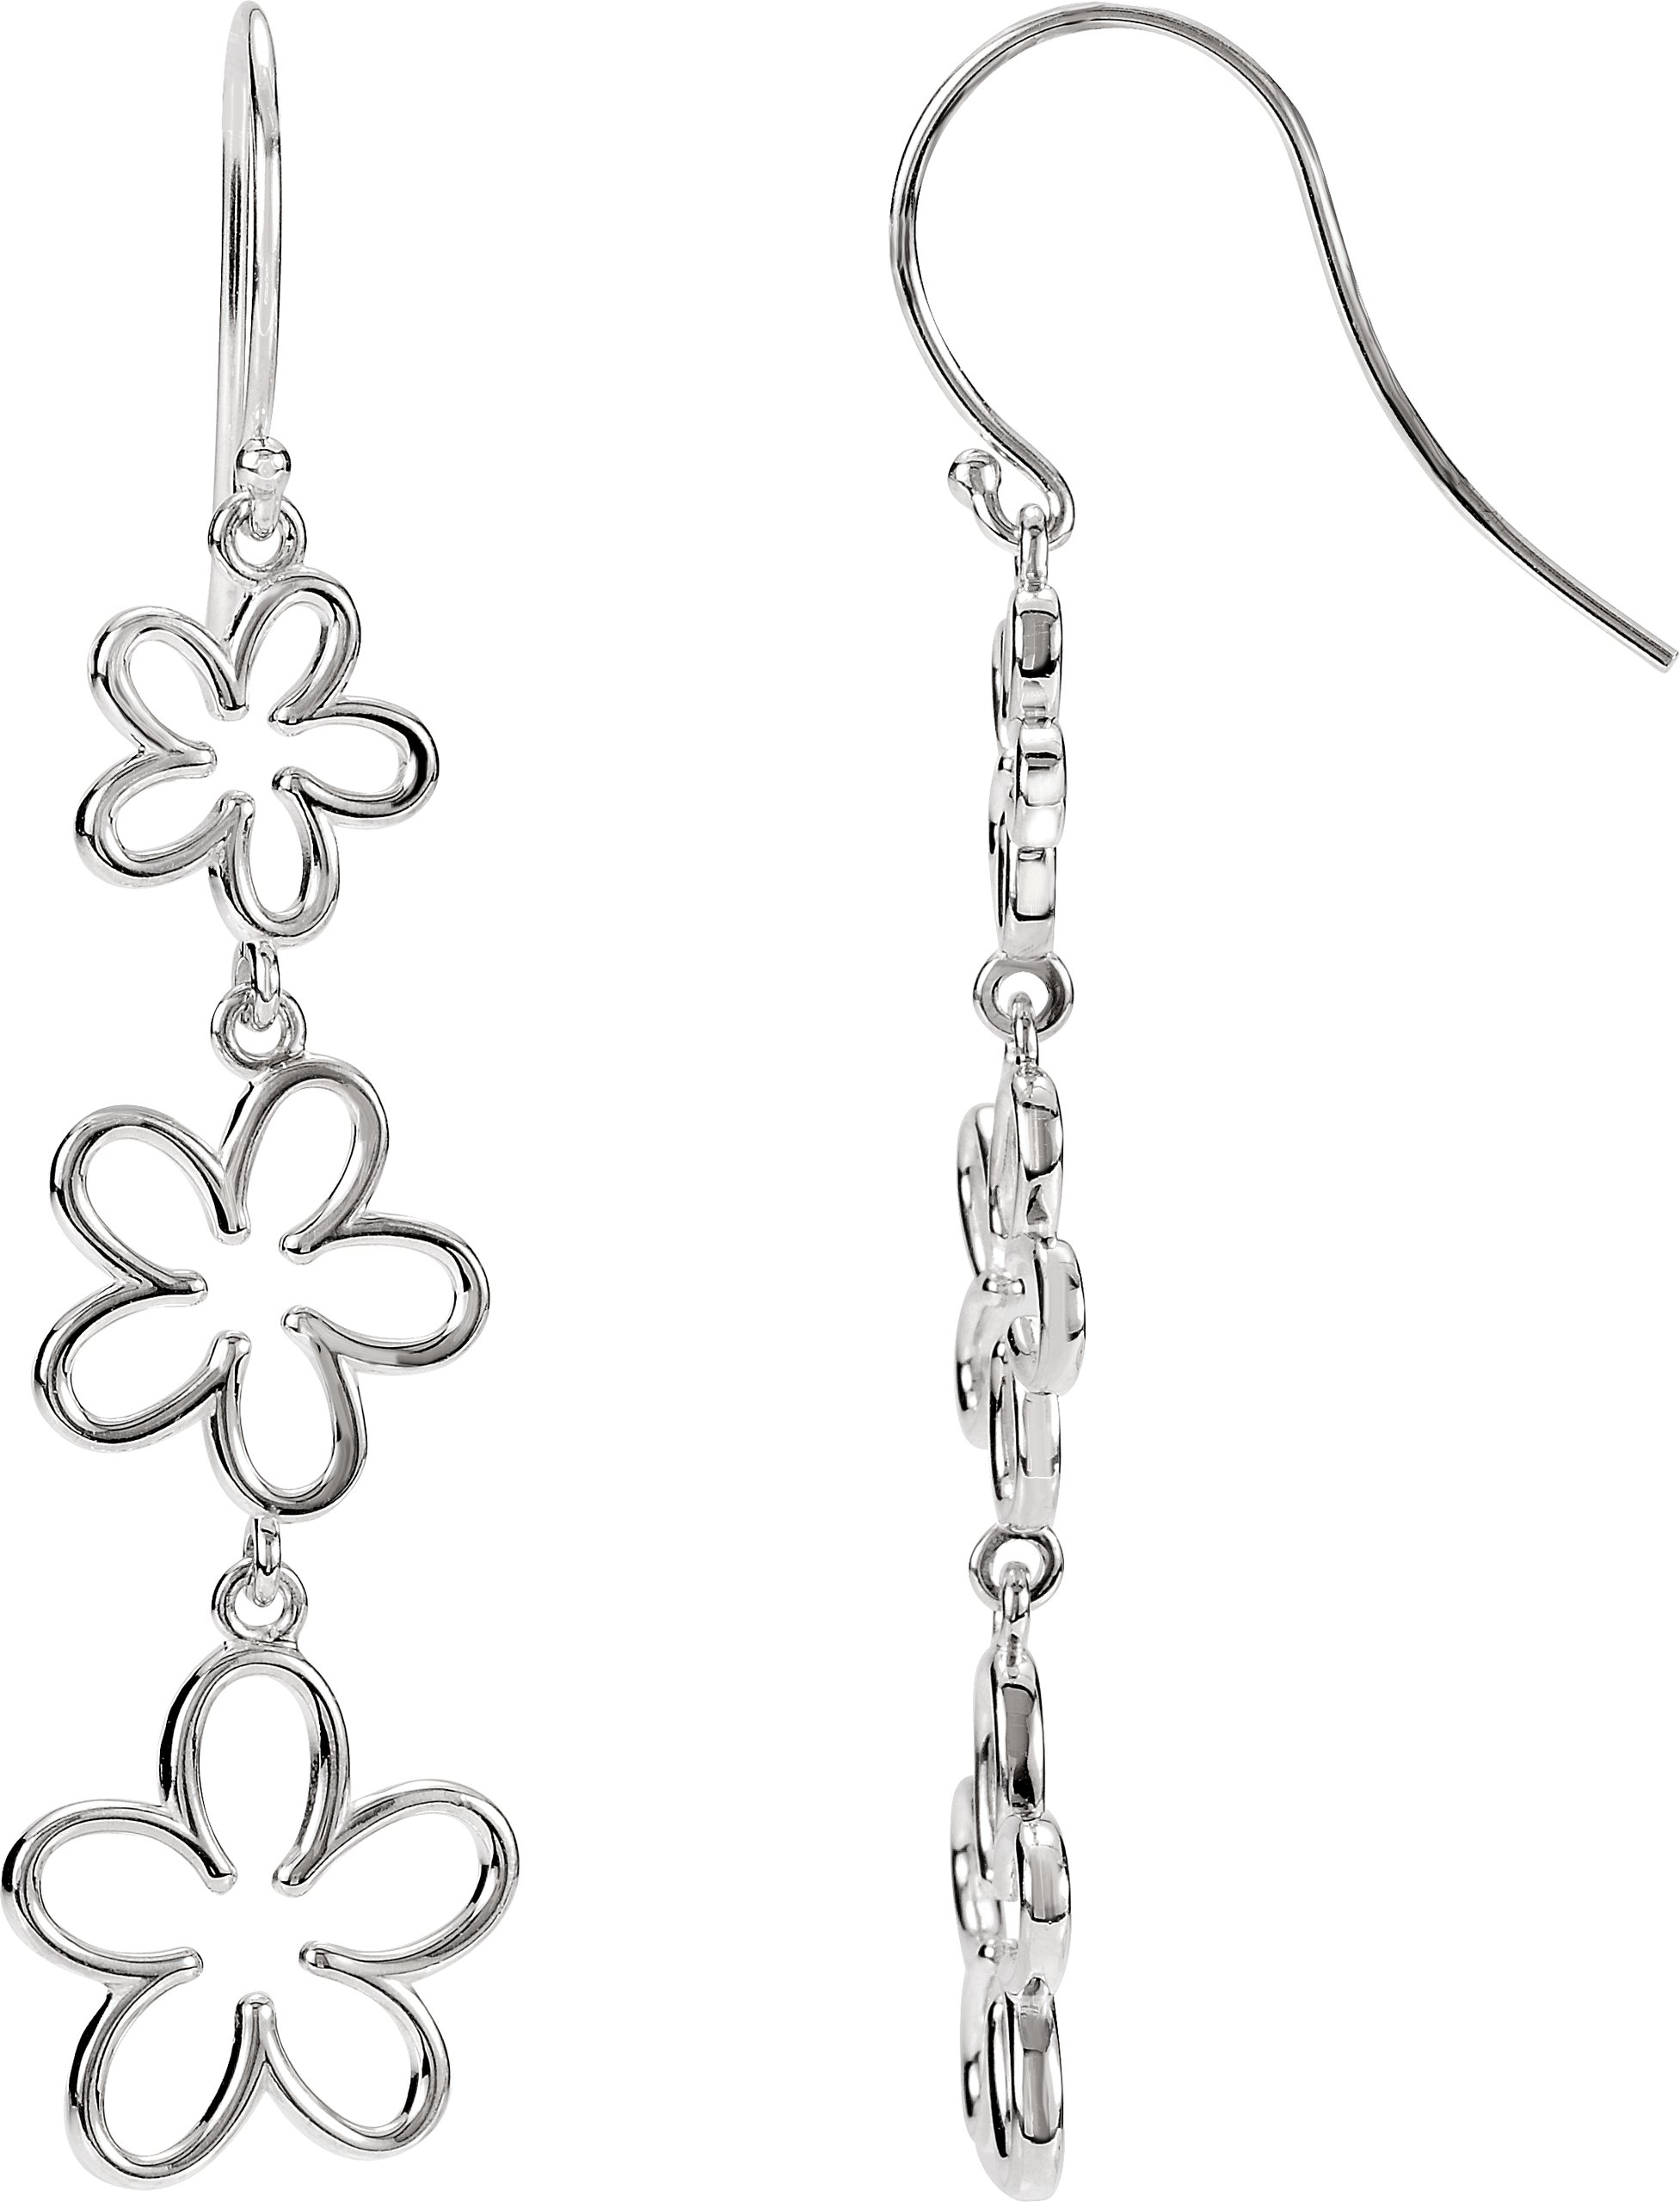 Sterling Silver Flower Dangle Earring